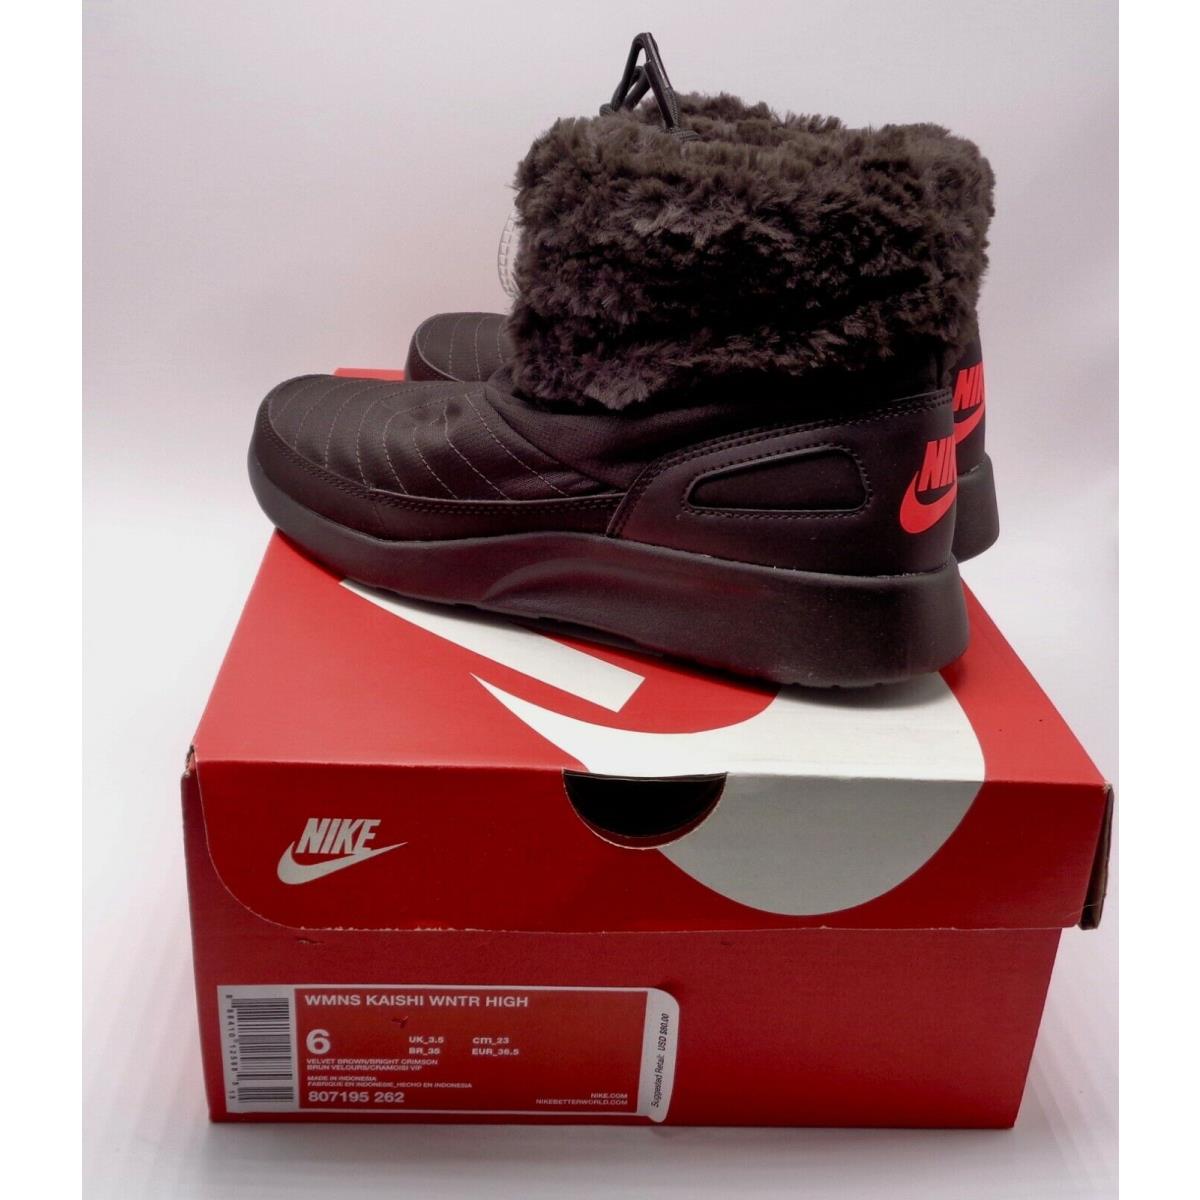 Nike Kaishi Winter High Shoes Boots Womens Size 6 Fur Velvet Brown/crimson